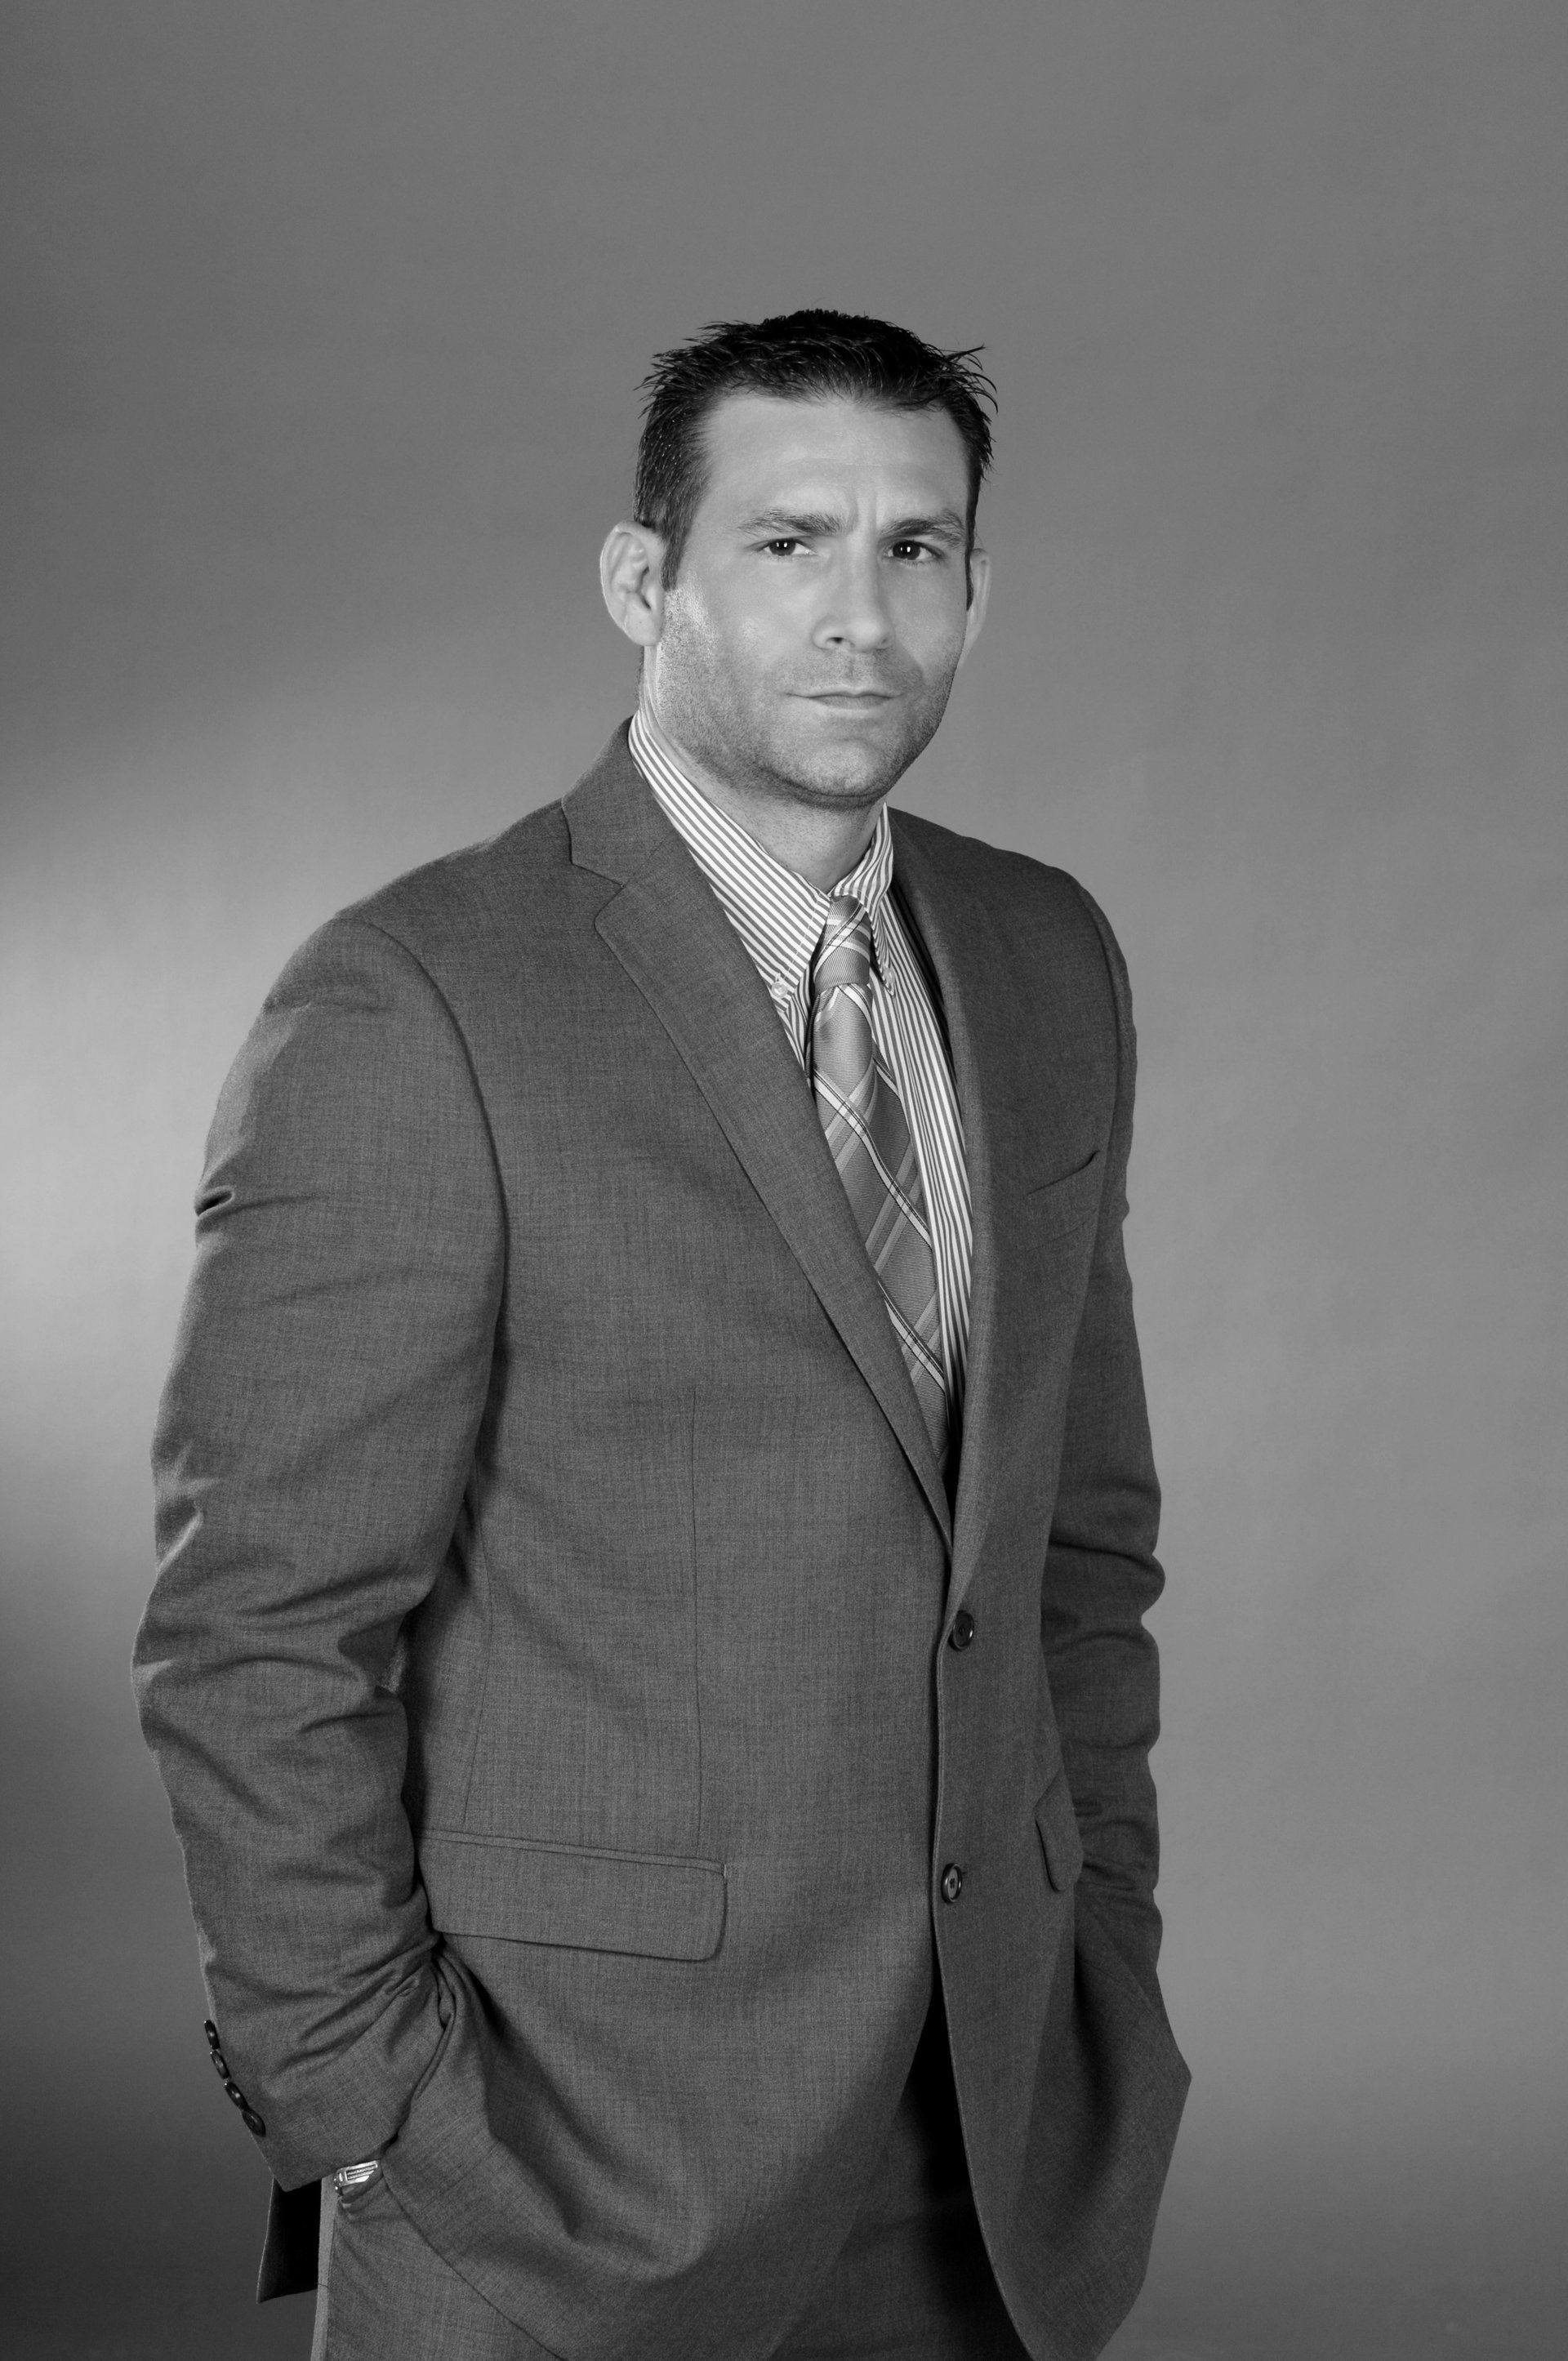 An image of South Florida Federal Criminal Defense Attorney Antonio D. Quinn